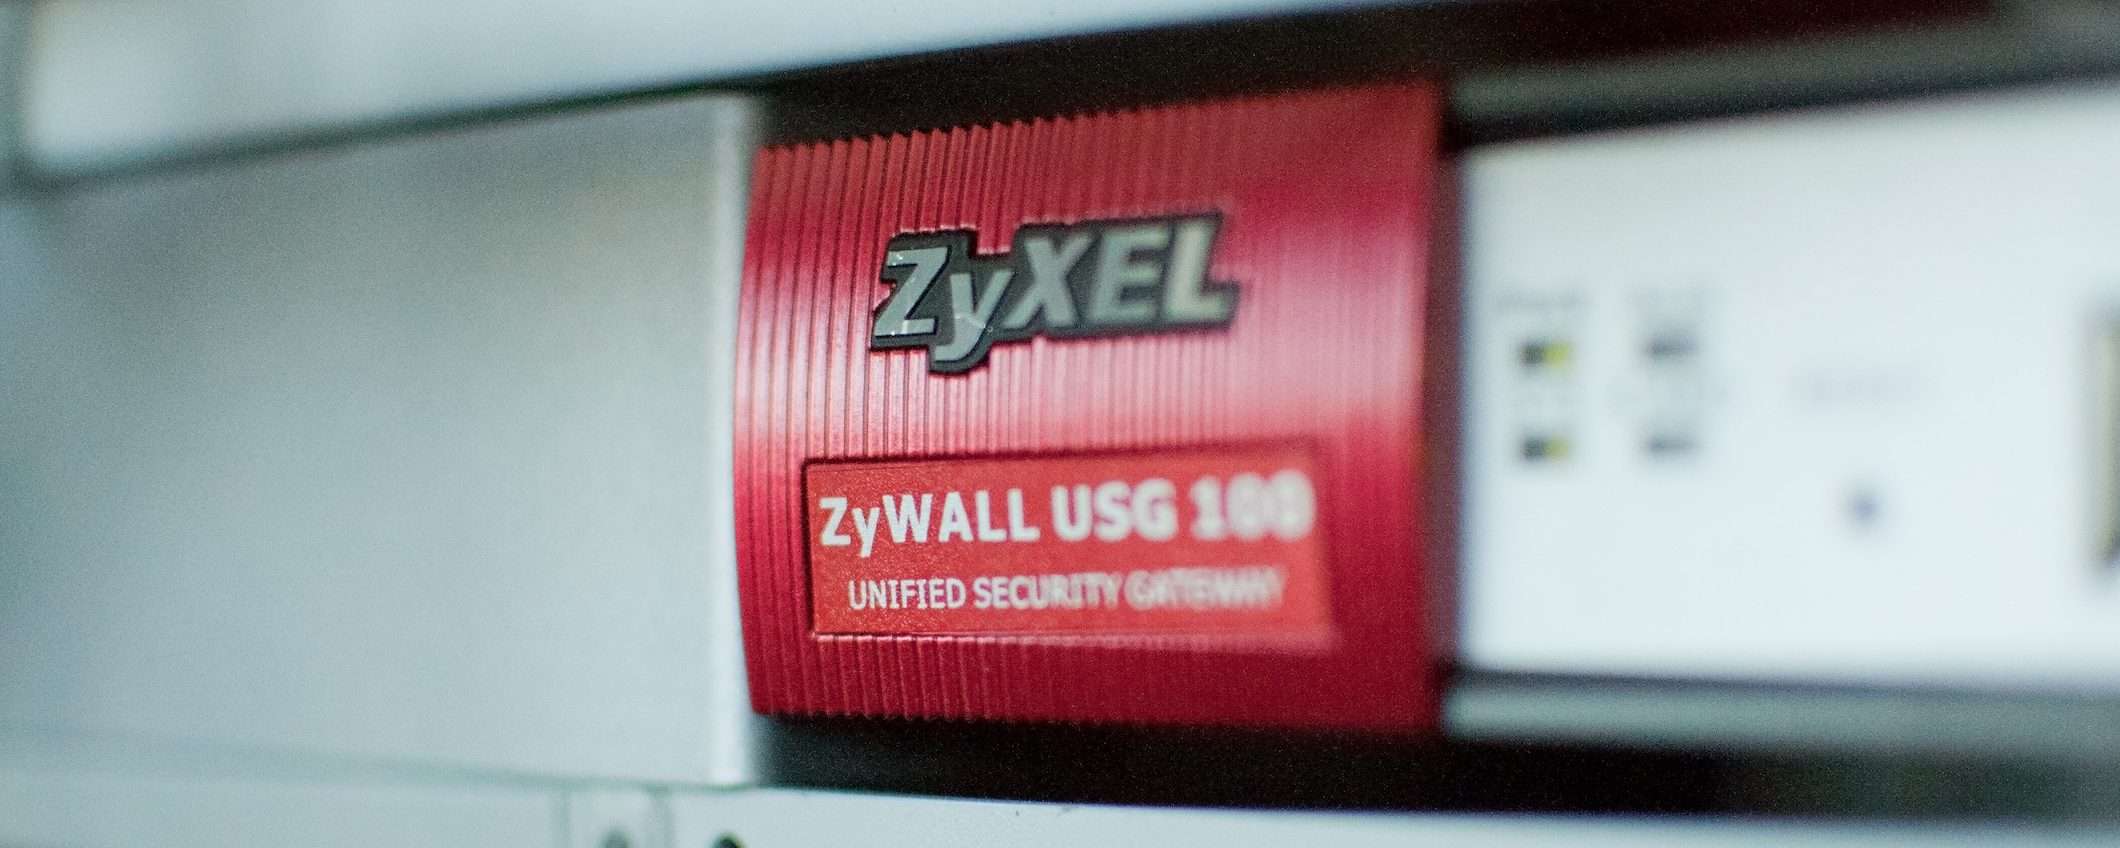 Zyxel: falla critica nei firewall, ma c'è la patch